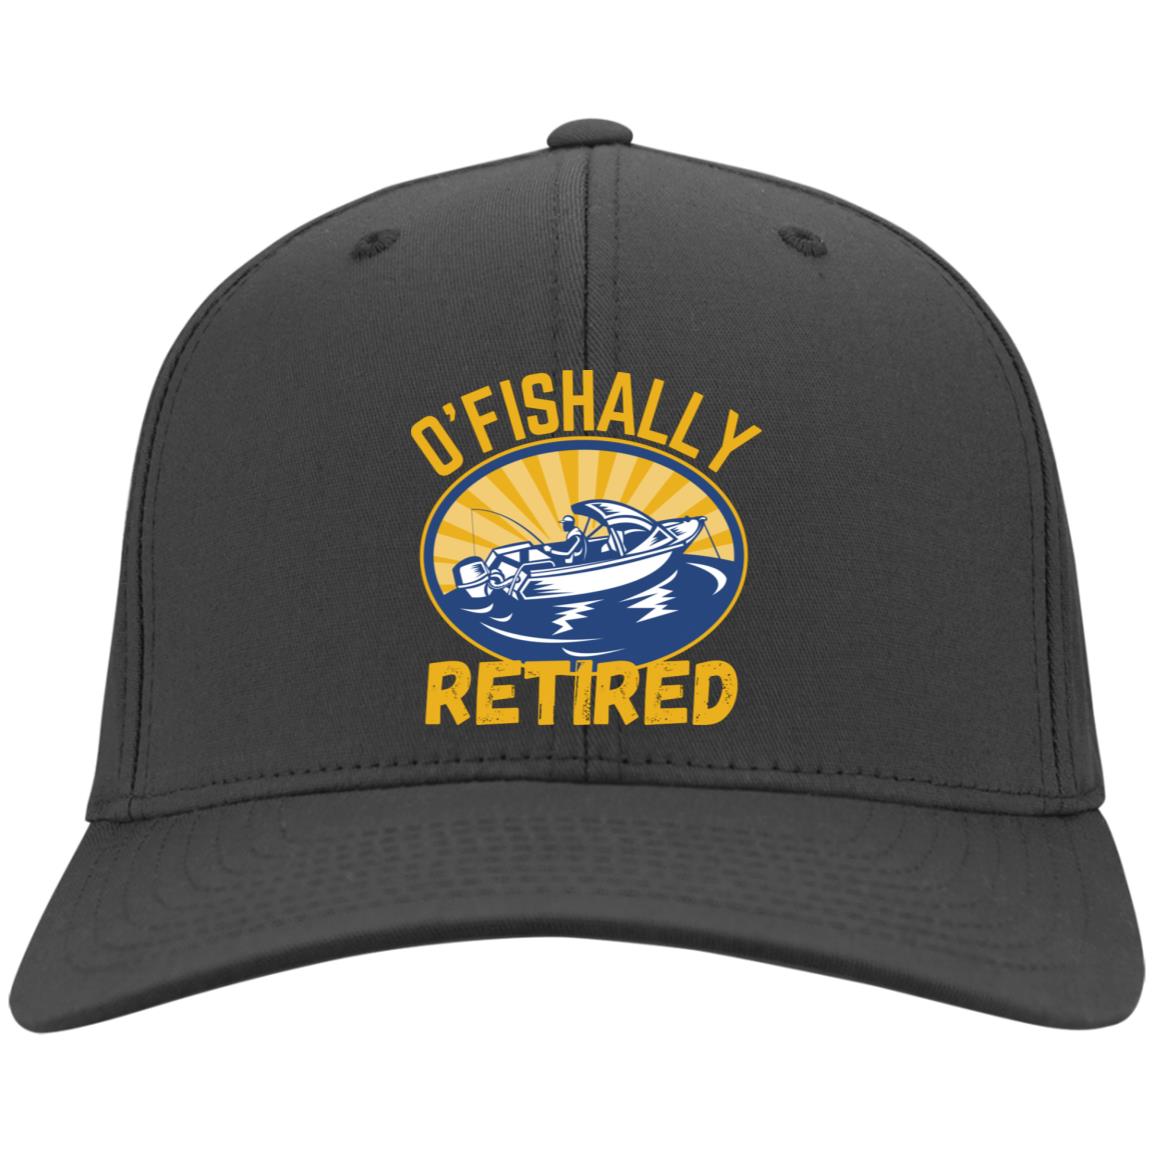 O'Fishally Retired Twill Cap